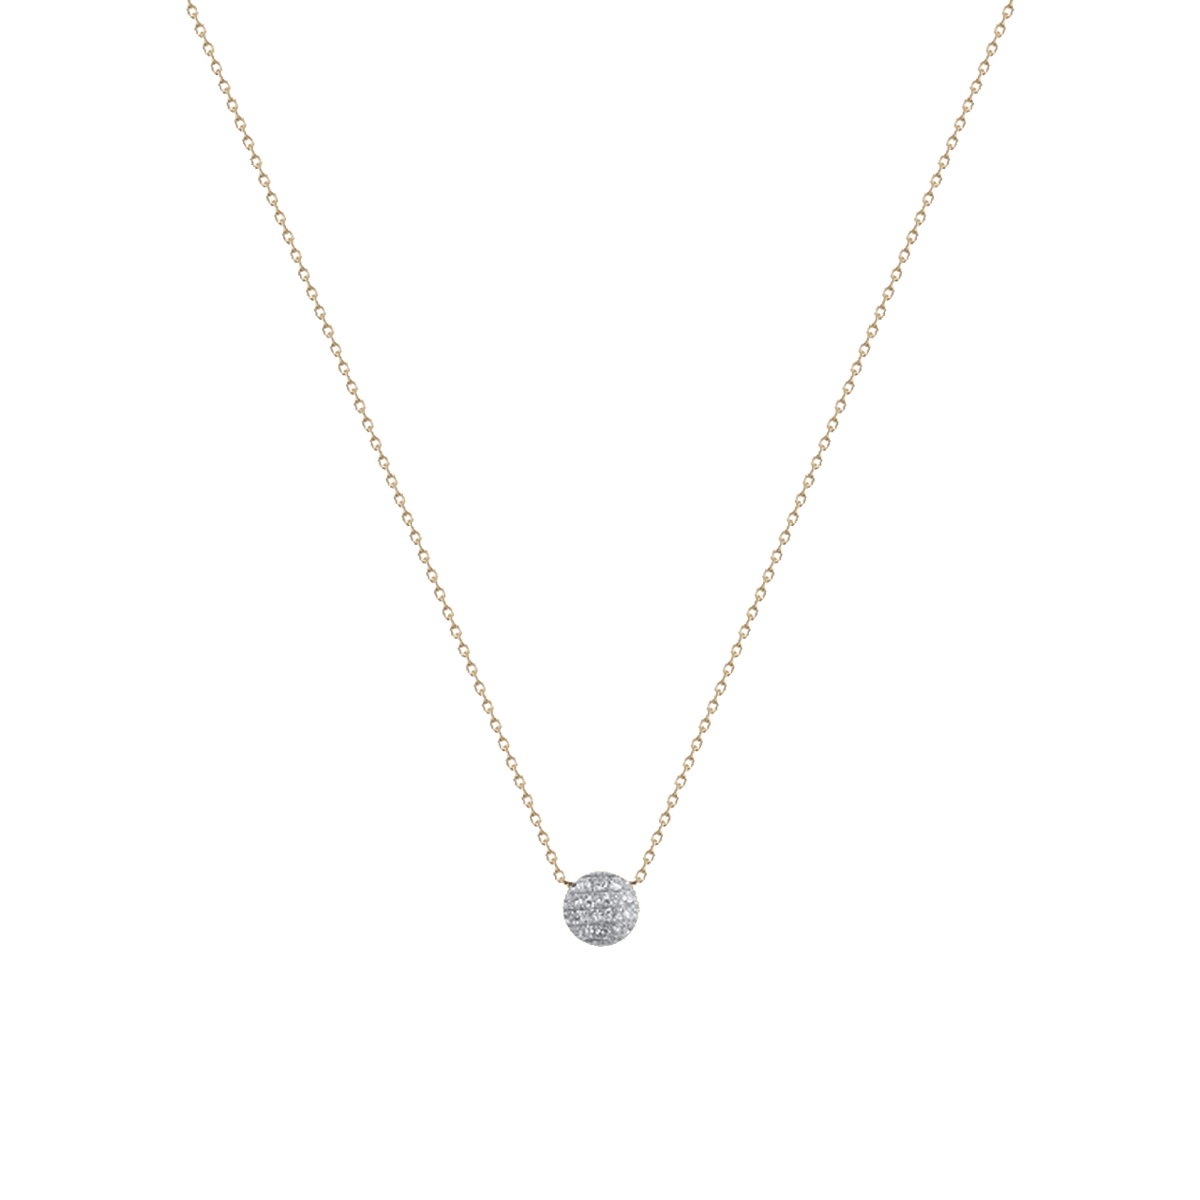 Lauren Joy Mini Disc Necklace (18 inches)